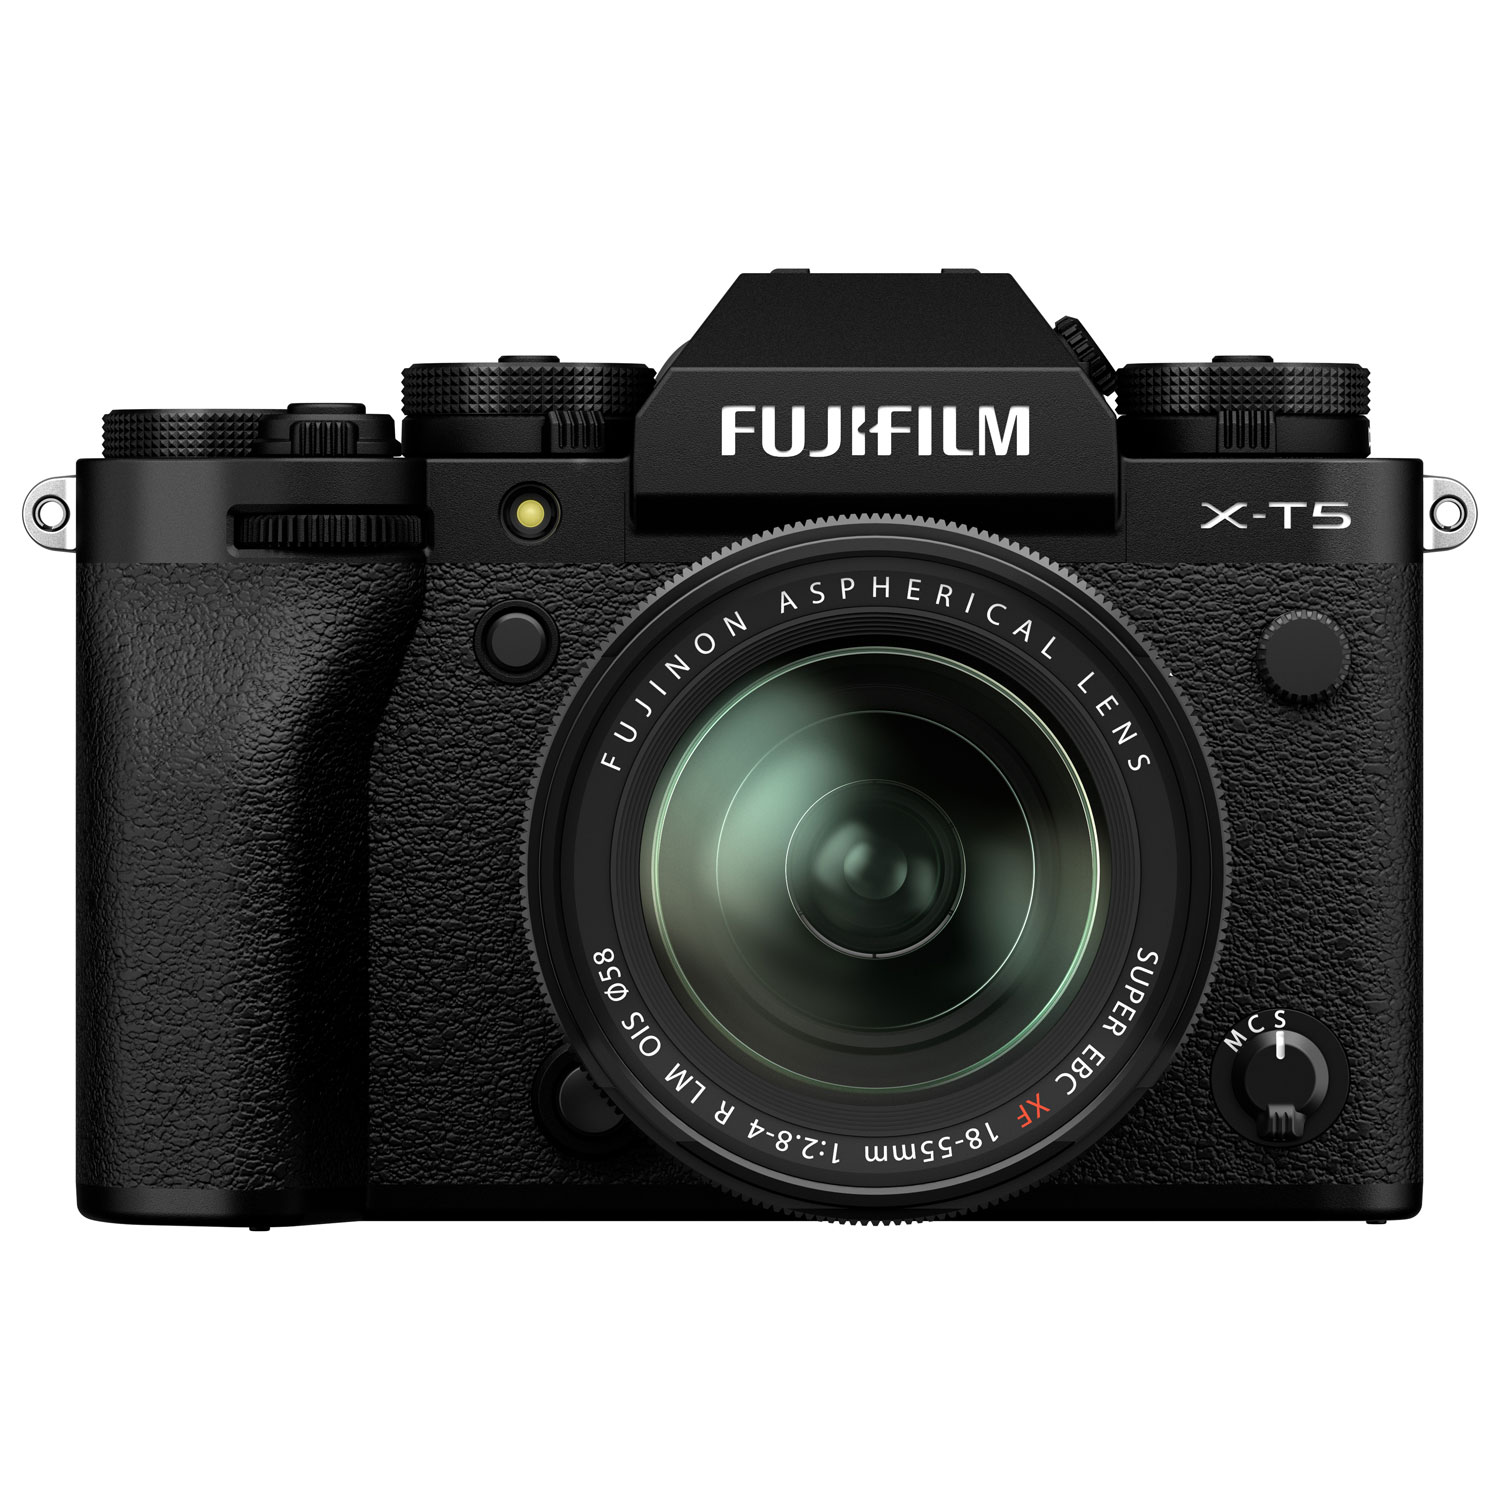 Fujifilm X-T5 Mirrorless Camera with XF 18-55mm f/2.8-4 R LM OIS Lens Kit - Black